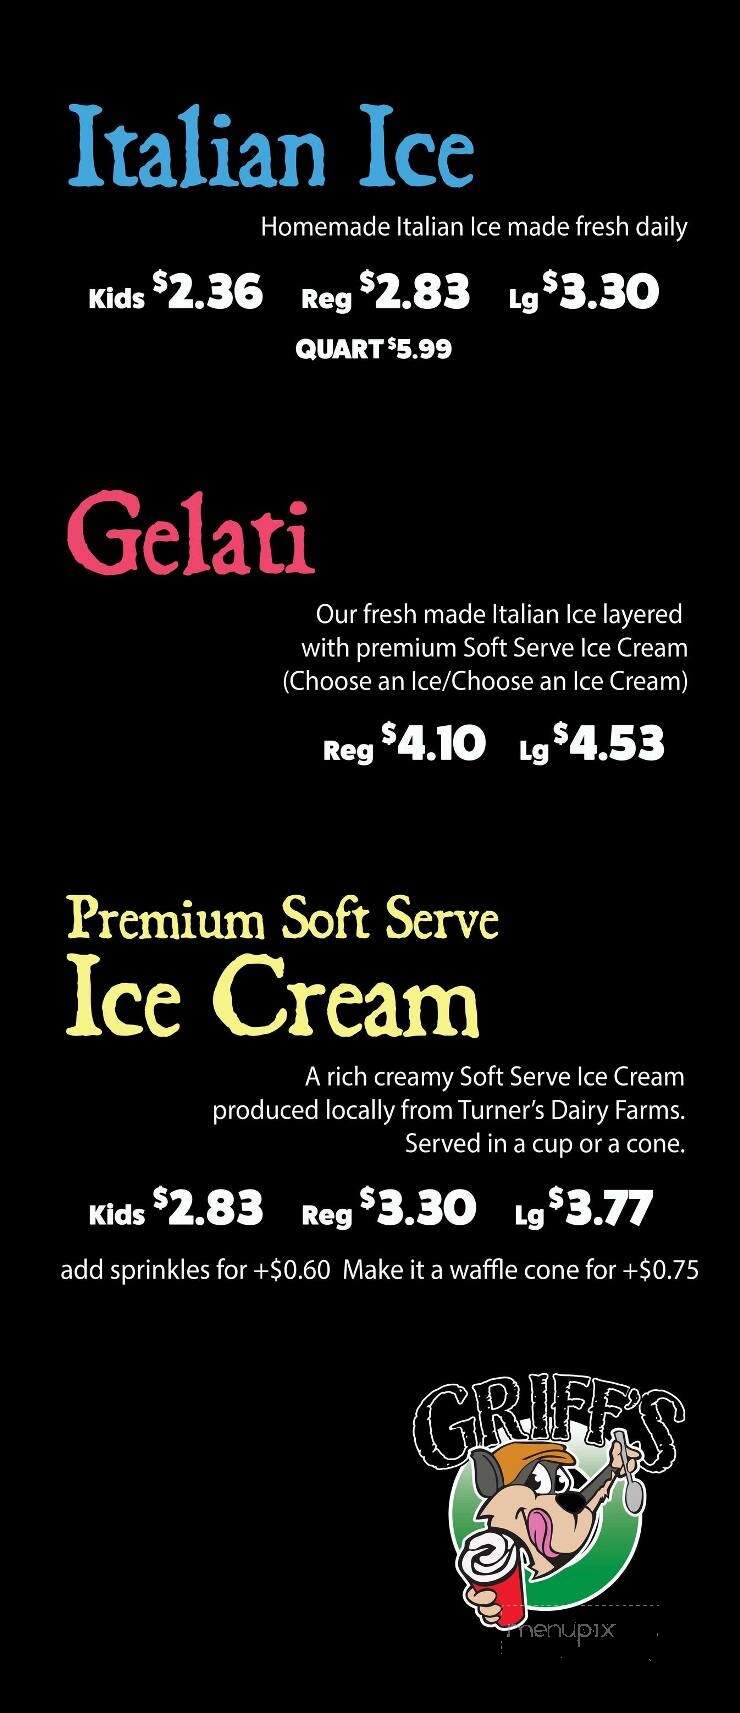 Griff's Italian Ice & Soft Serve - Export, PA